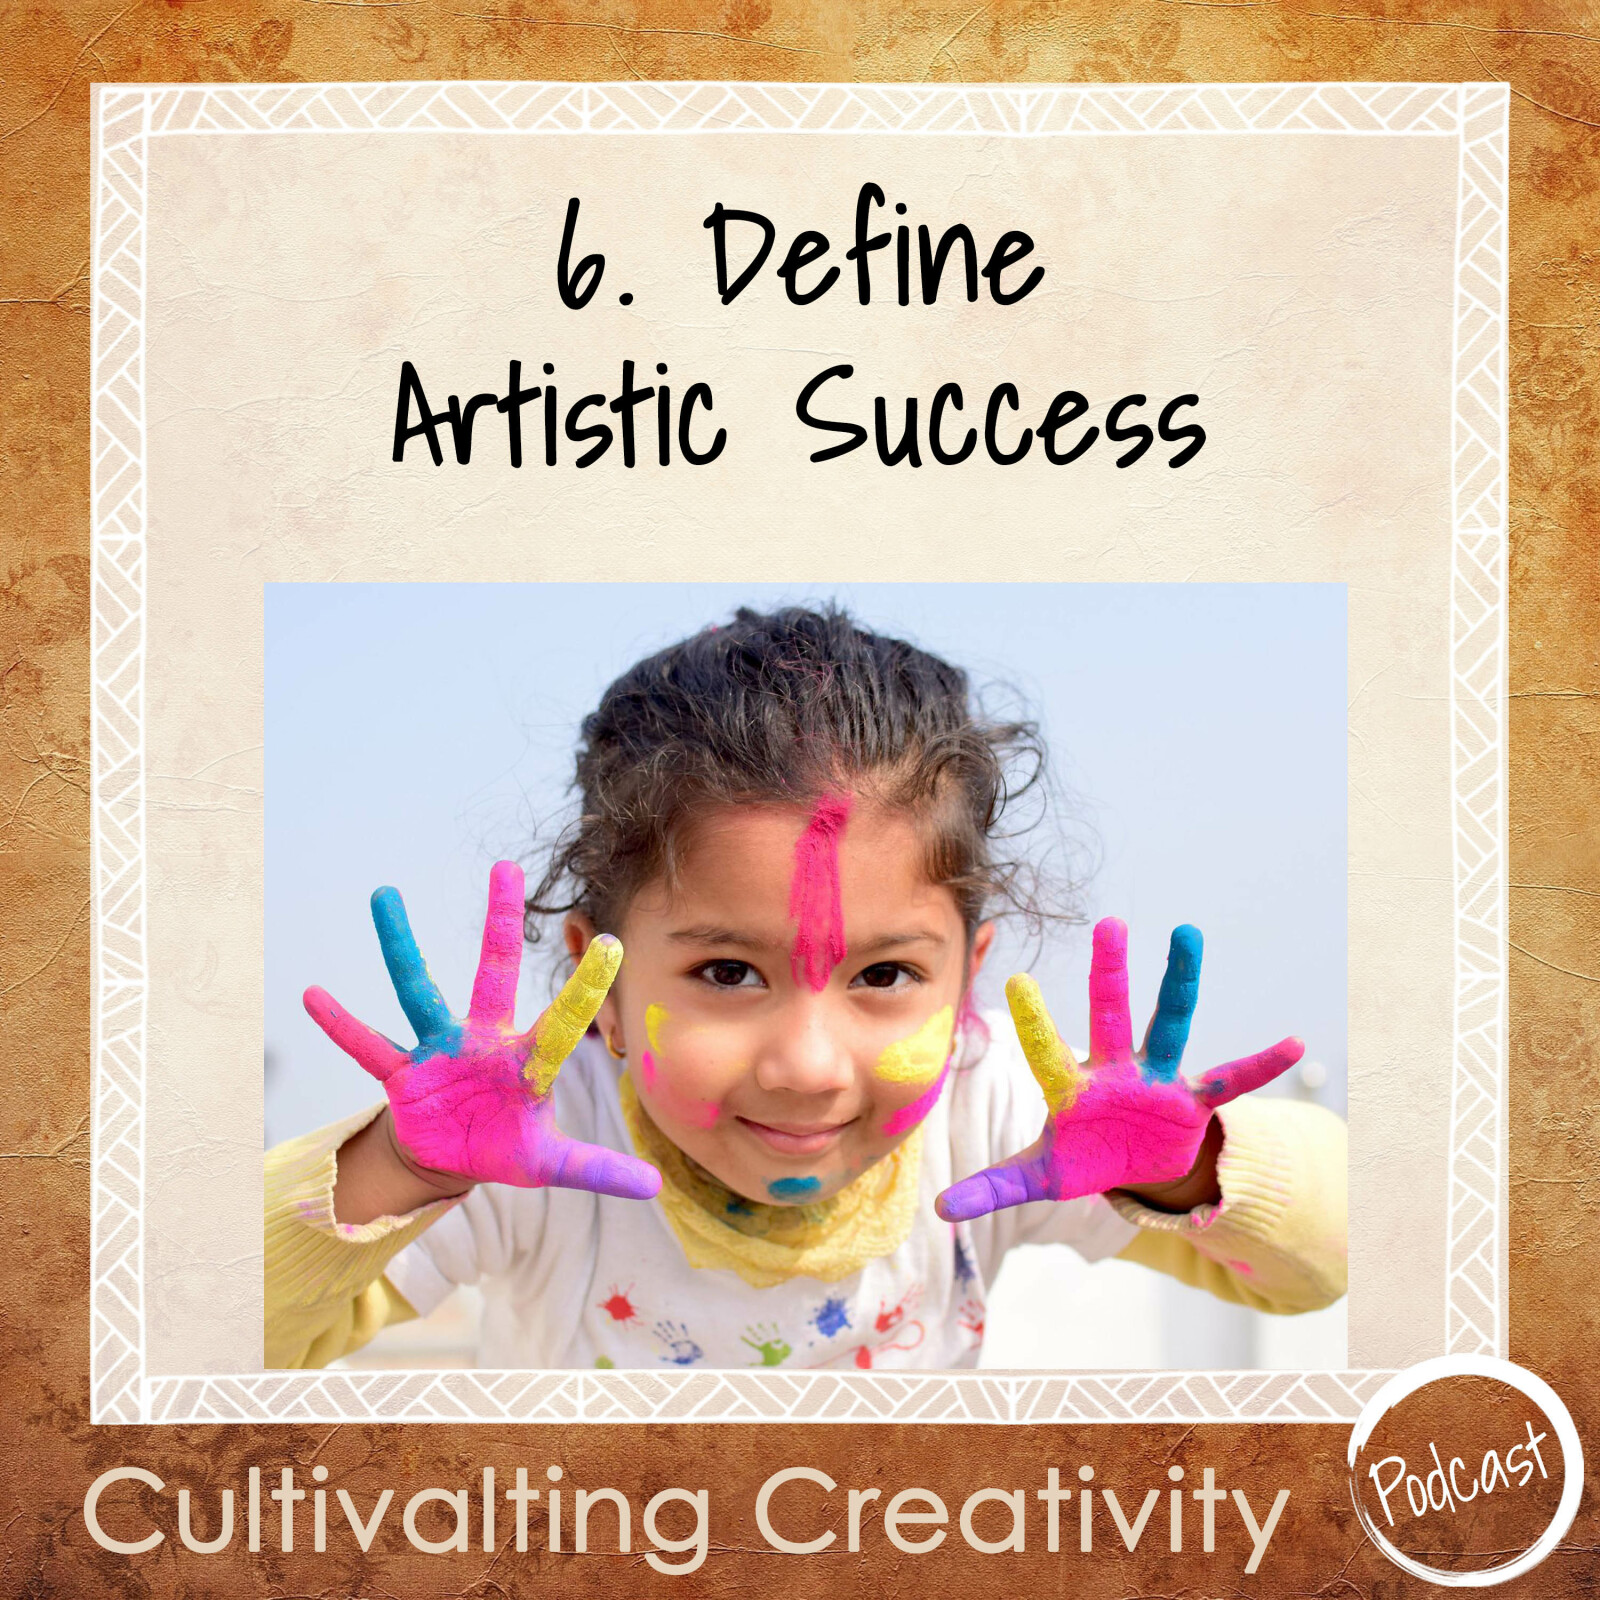 6. Define Artistic Success